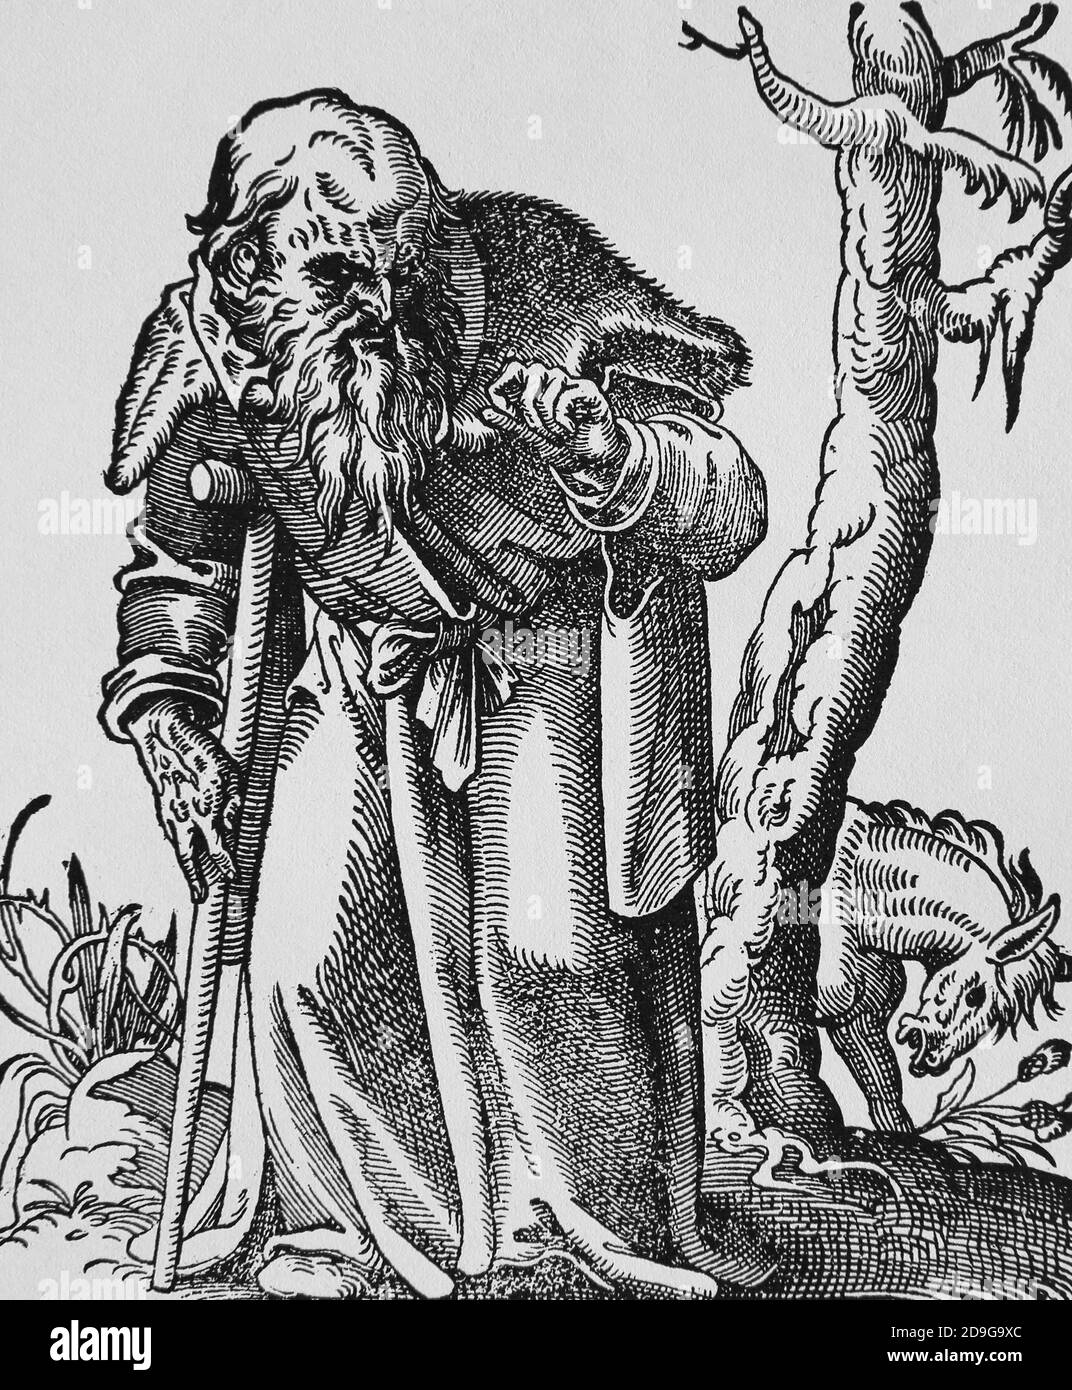 Renaissance era. 16th century. Old man with crutch. Engraving by Jost Amman, 1599. Stock Photo